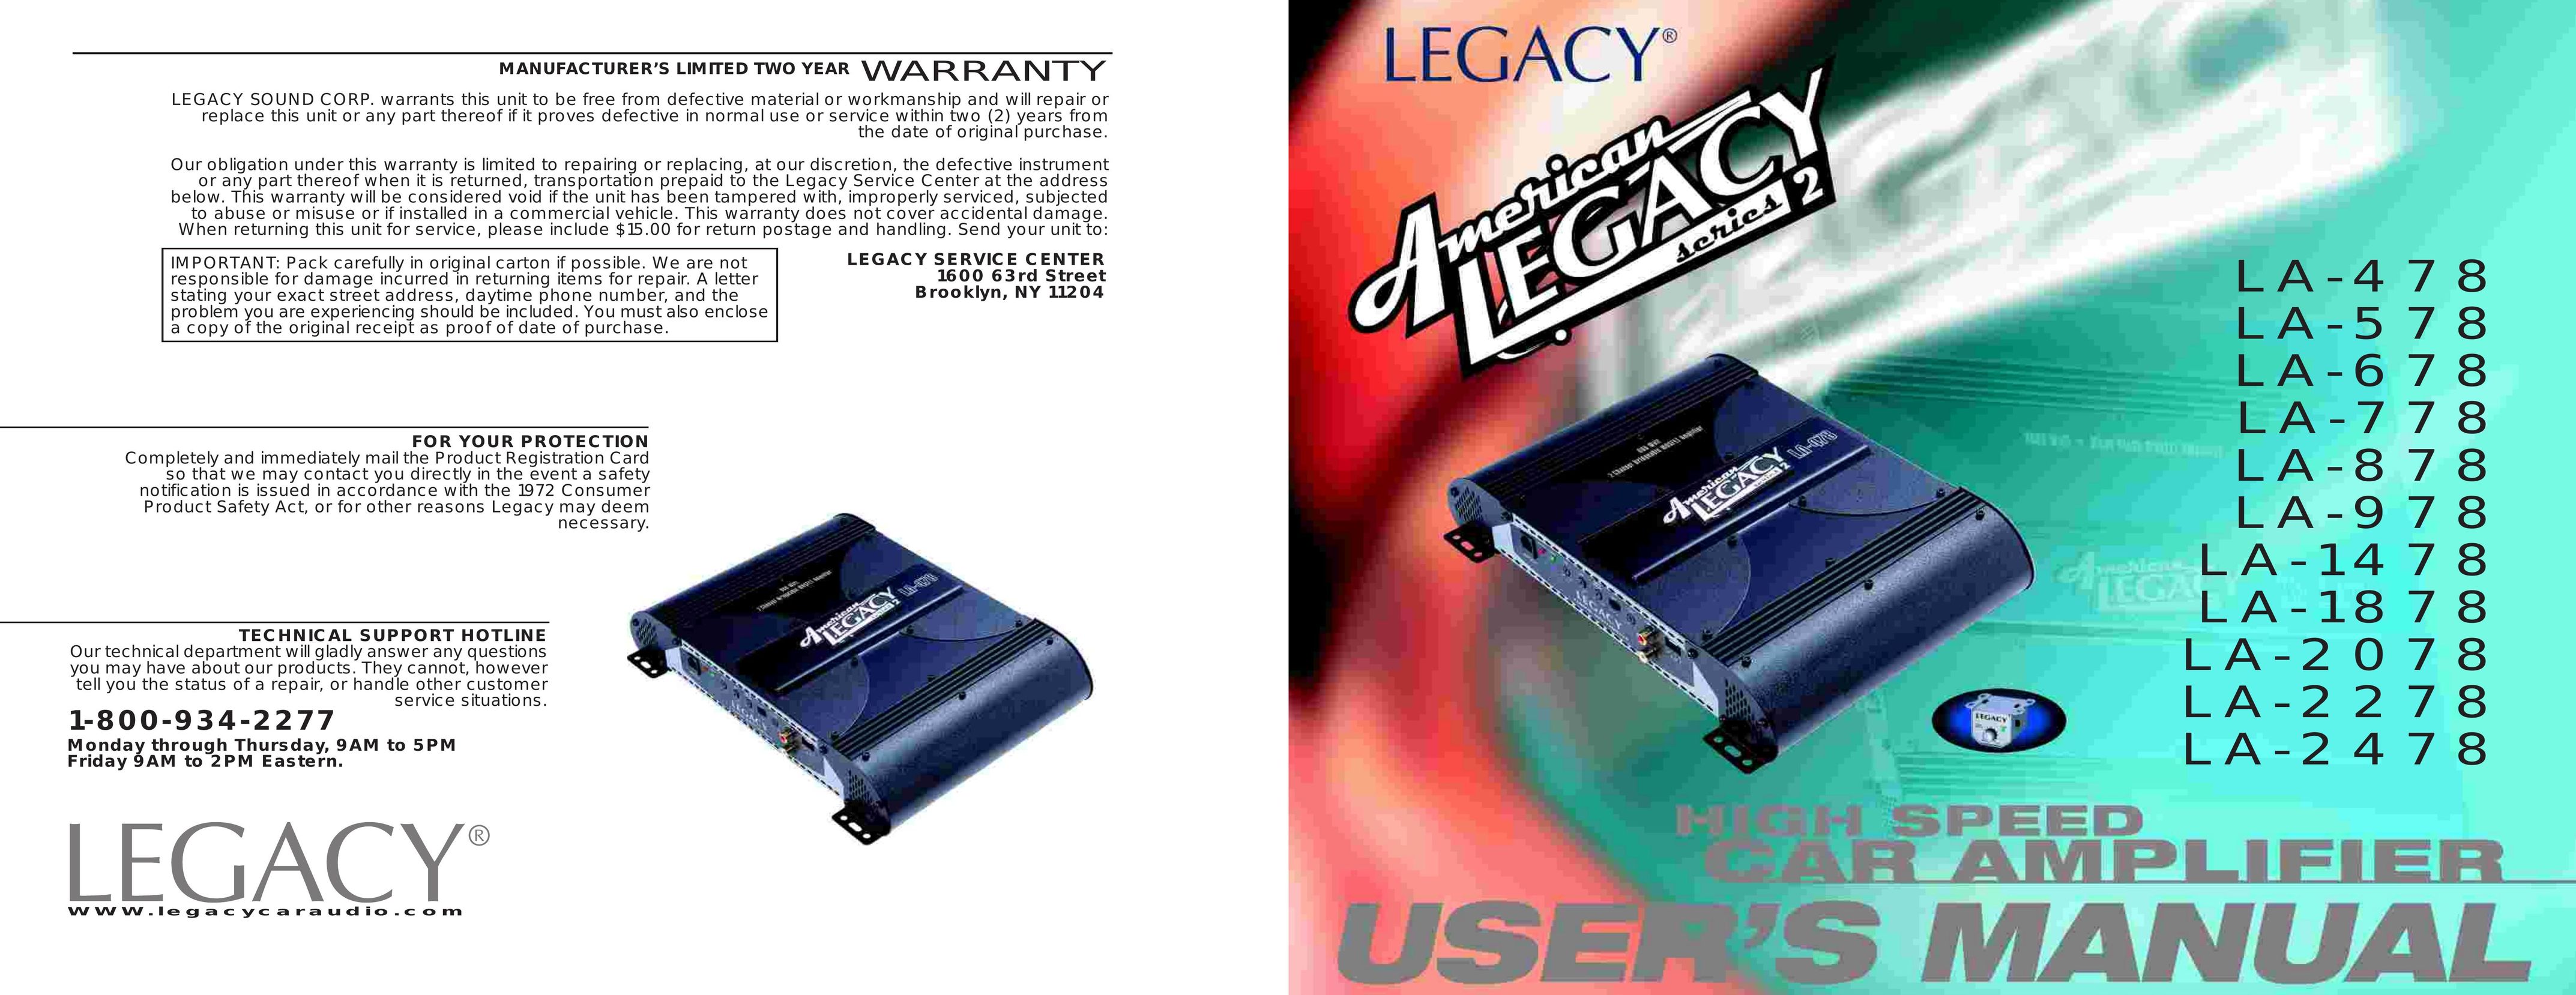 Legacy Car Audio LA-878 Car Amplifier User Manual